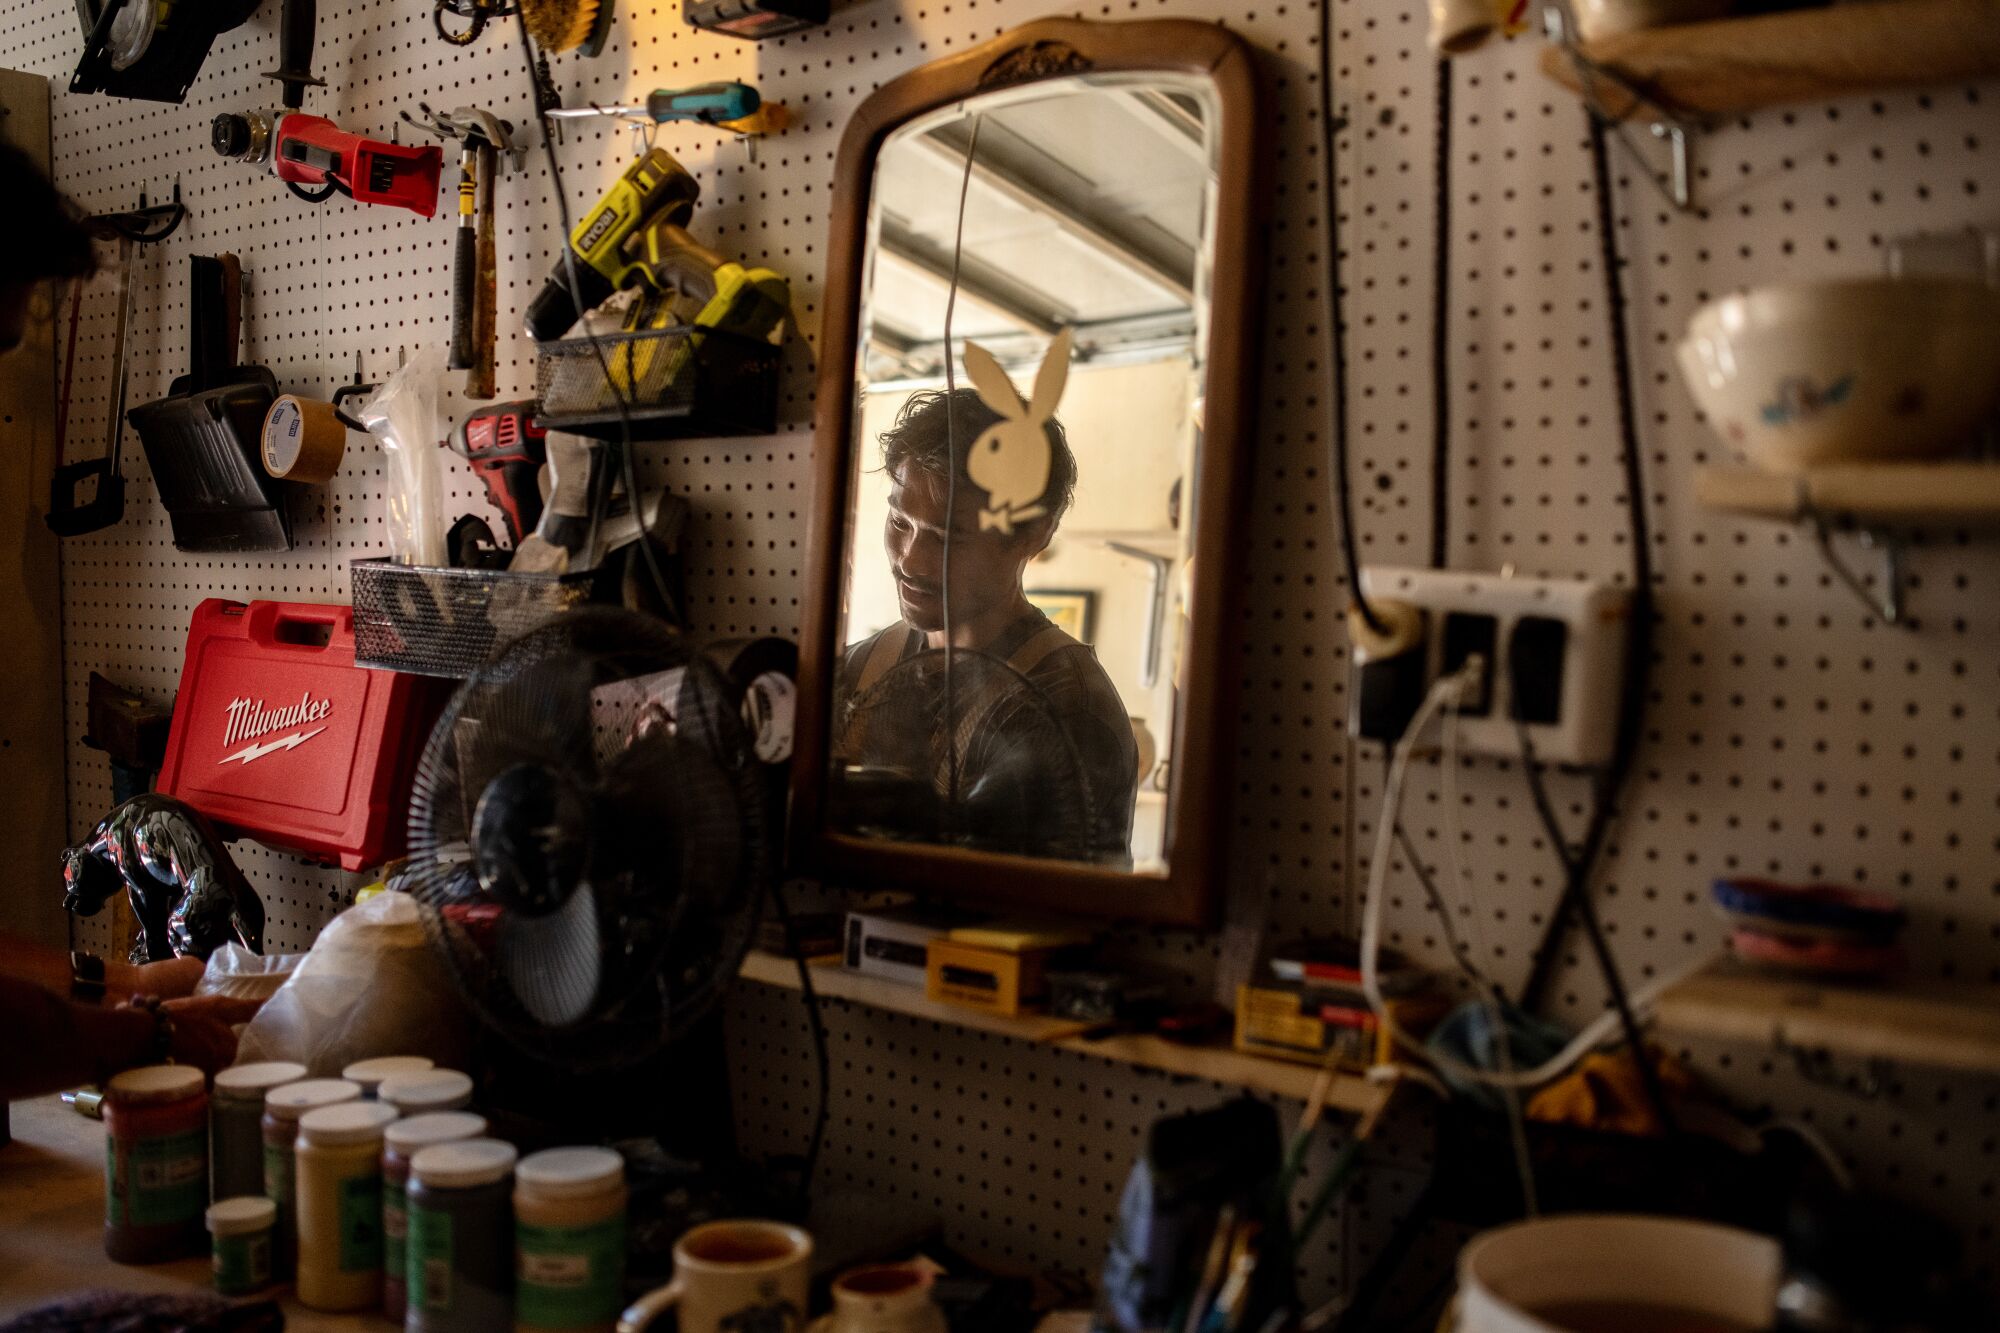 Daniel Dooreck reflected in a mirror in a garage.